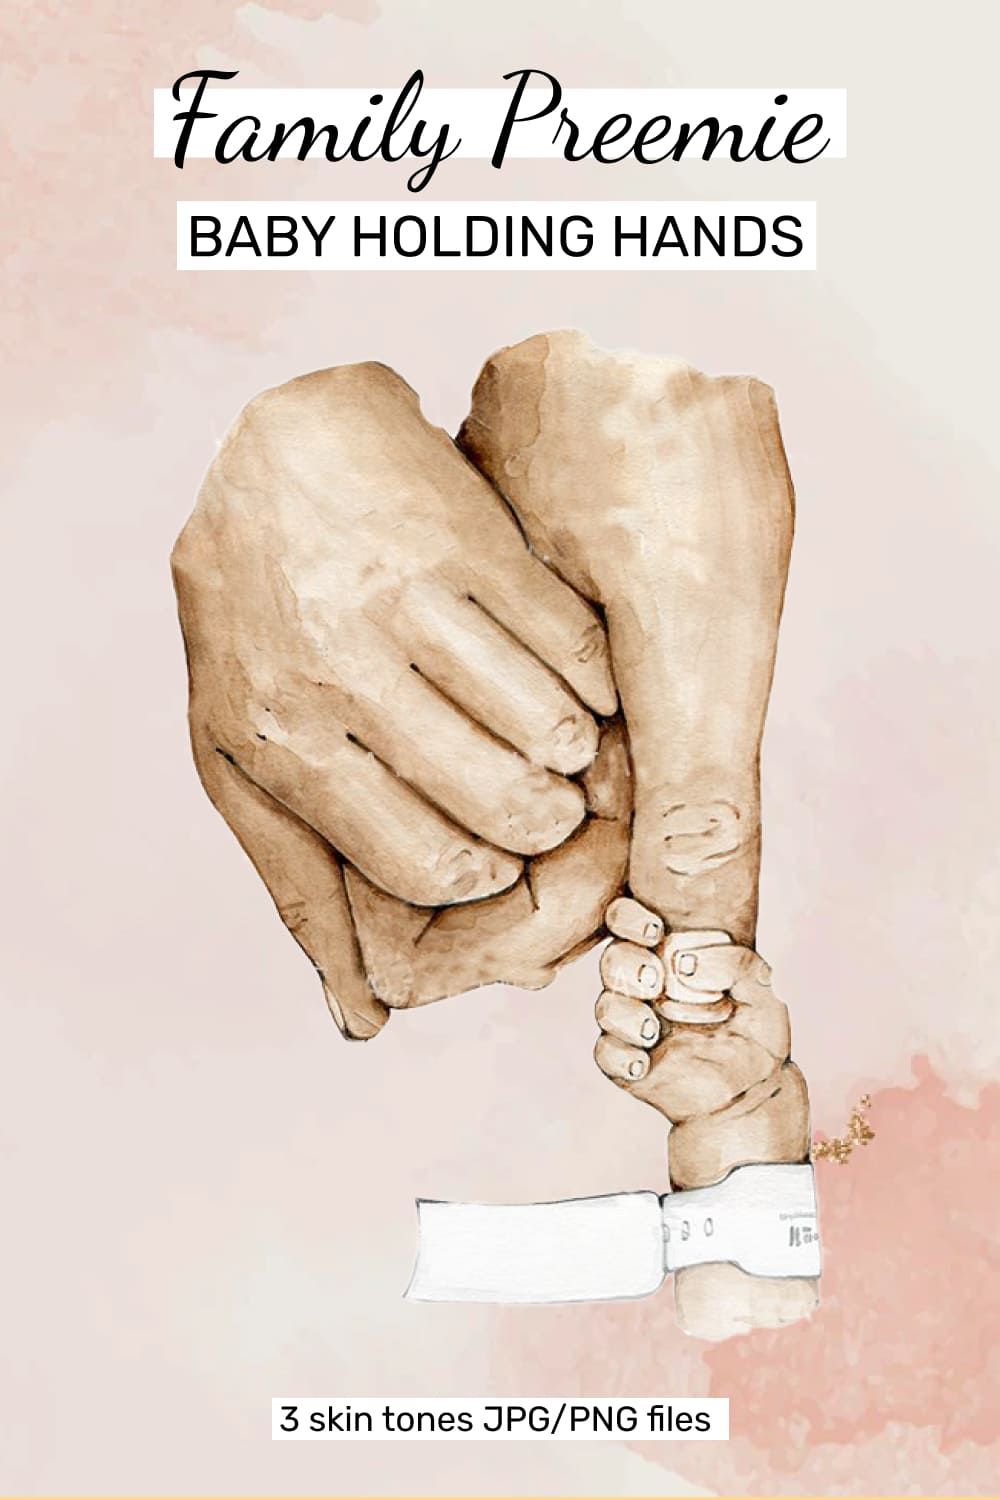 Family Preemie Baby Holding Hands - Pinterest.